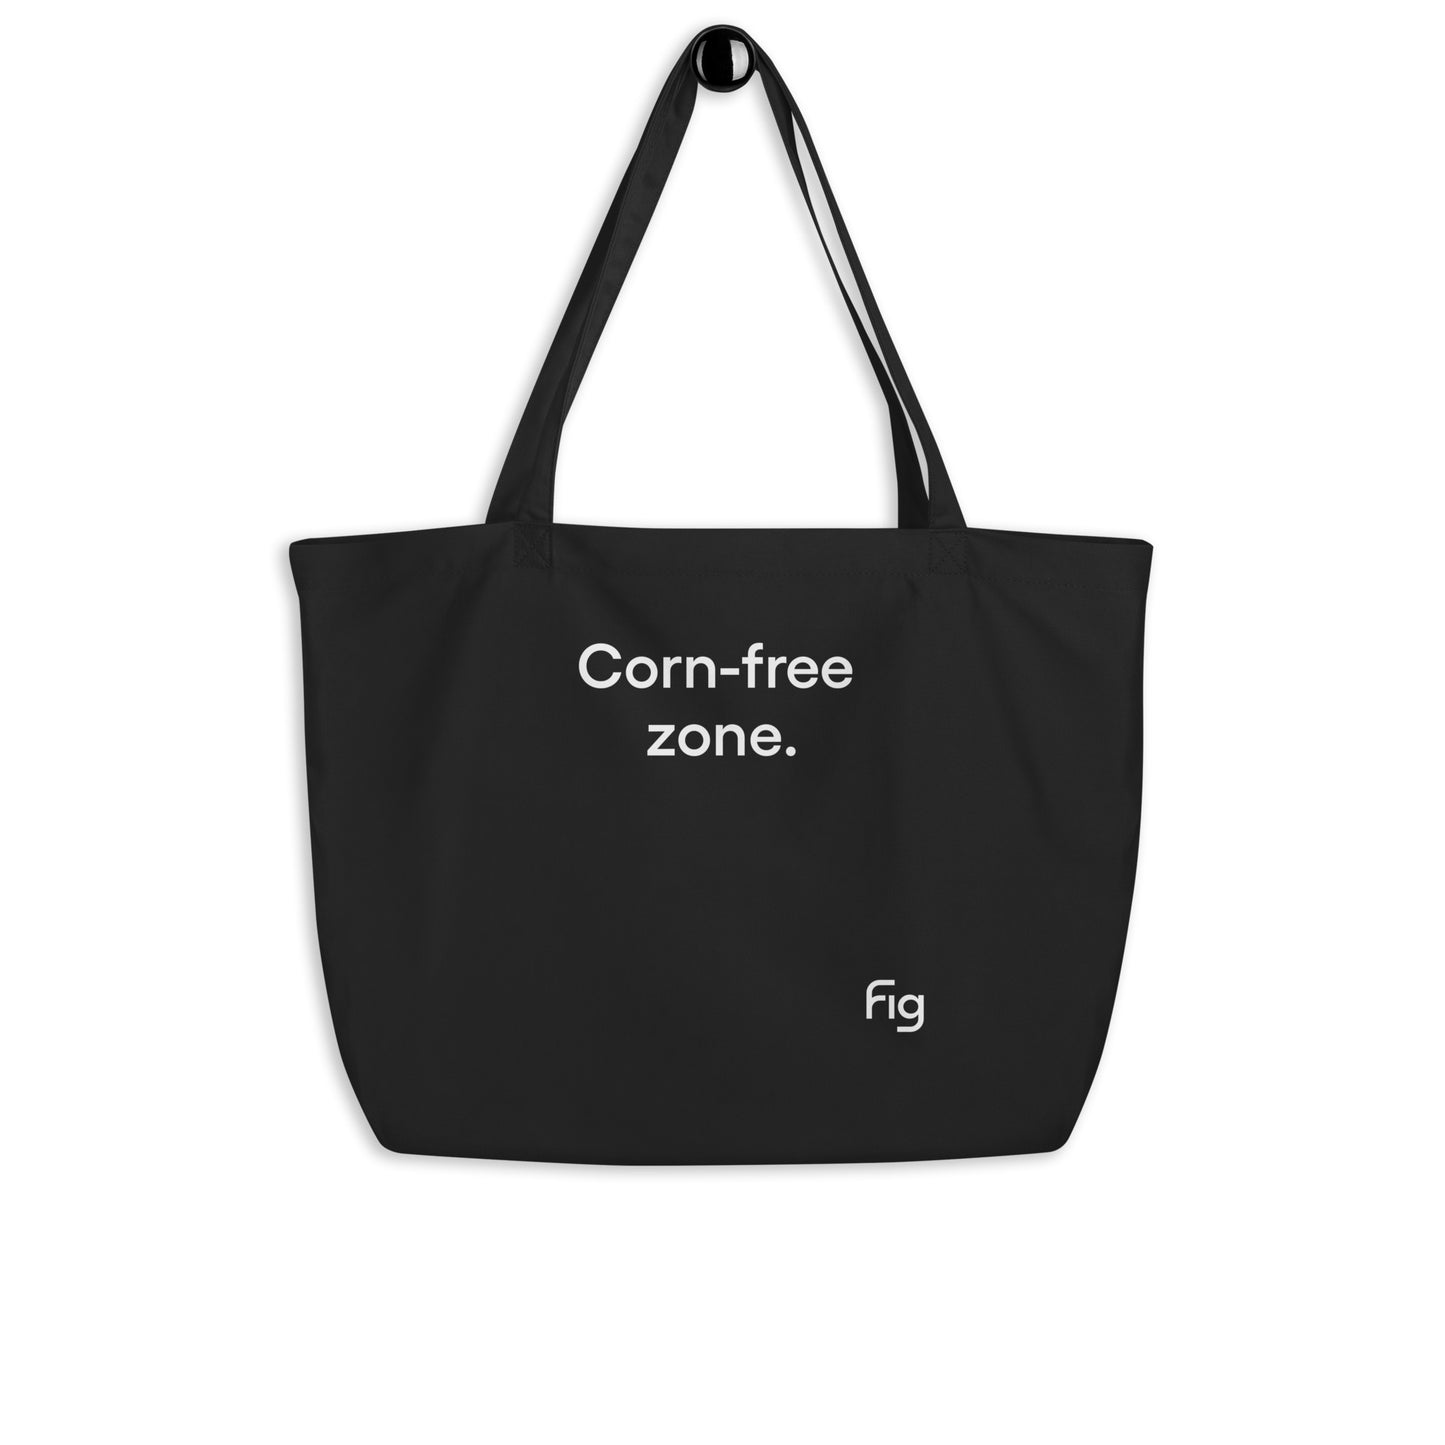 Corn-free zone | Large organic tote bag